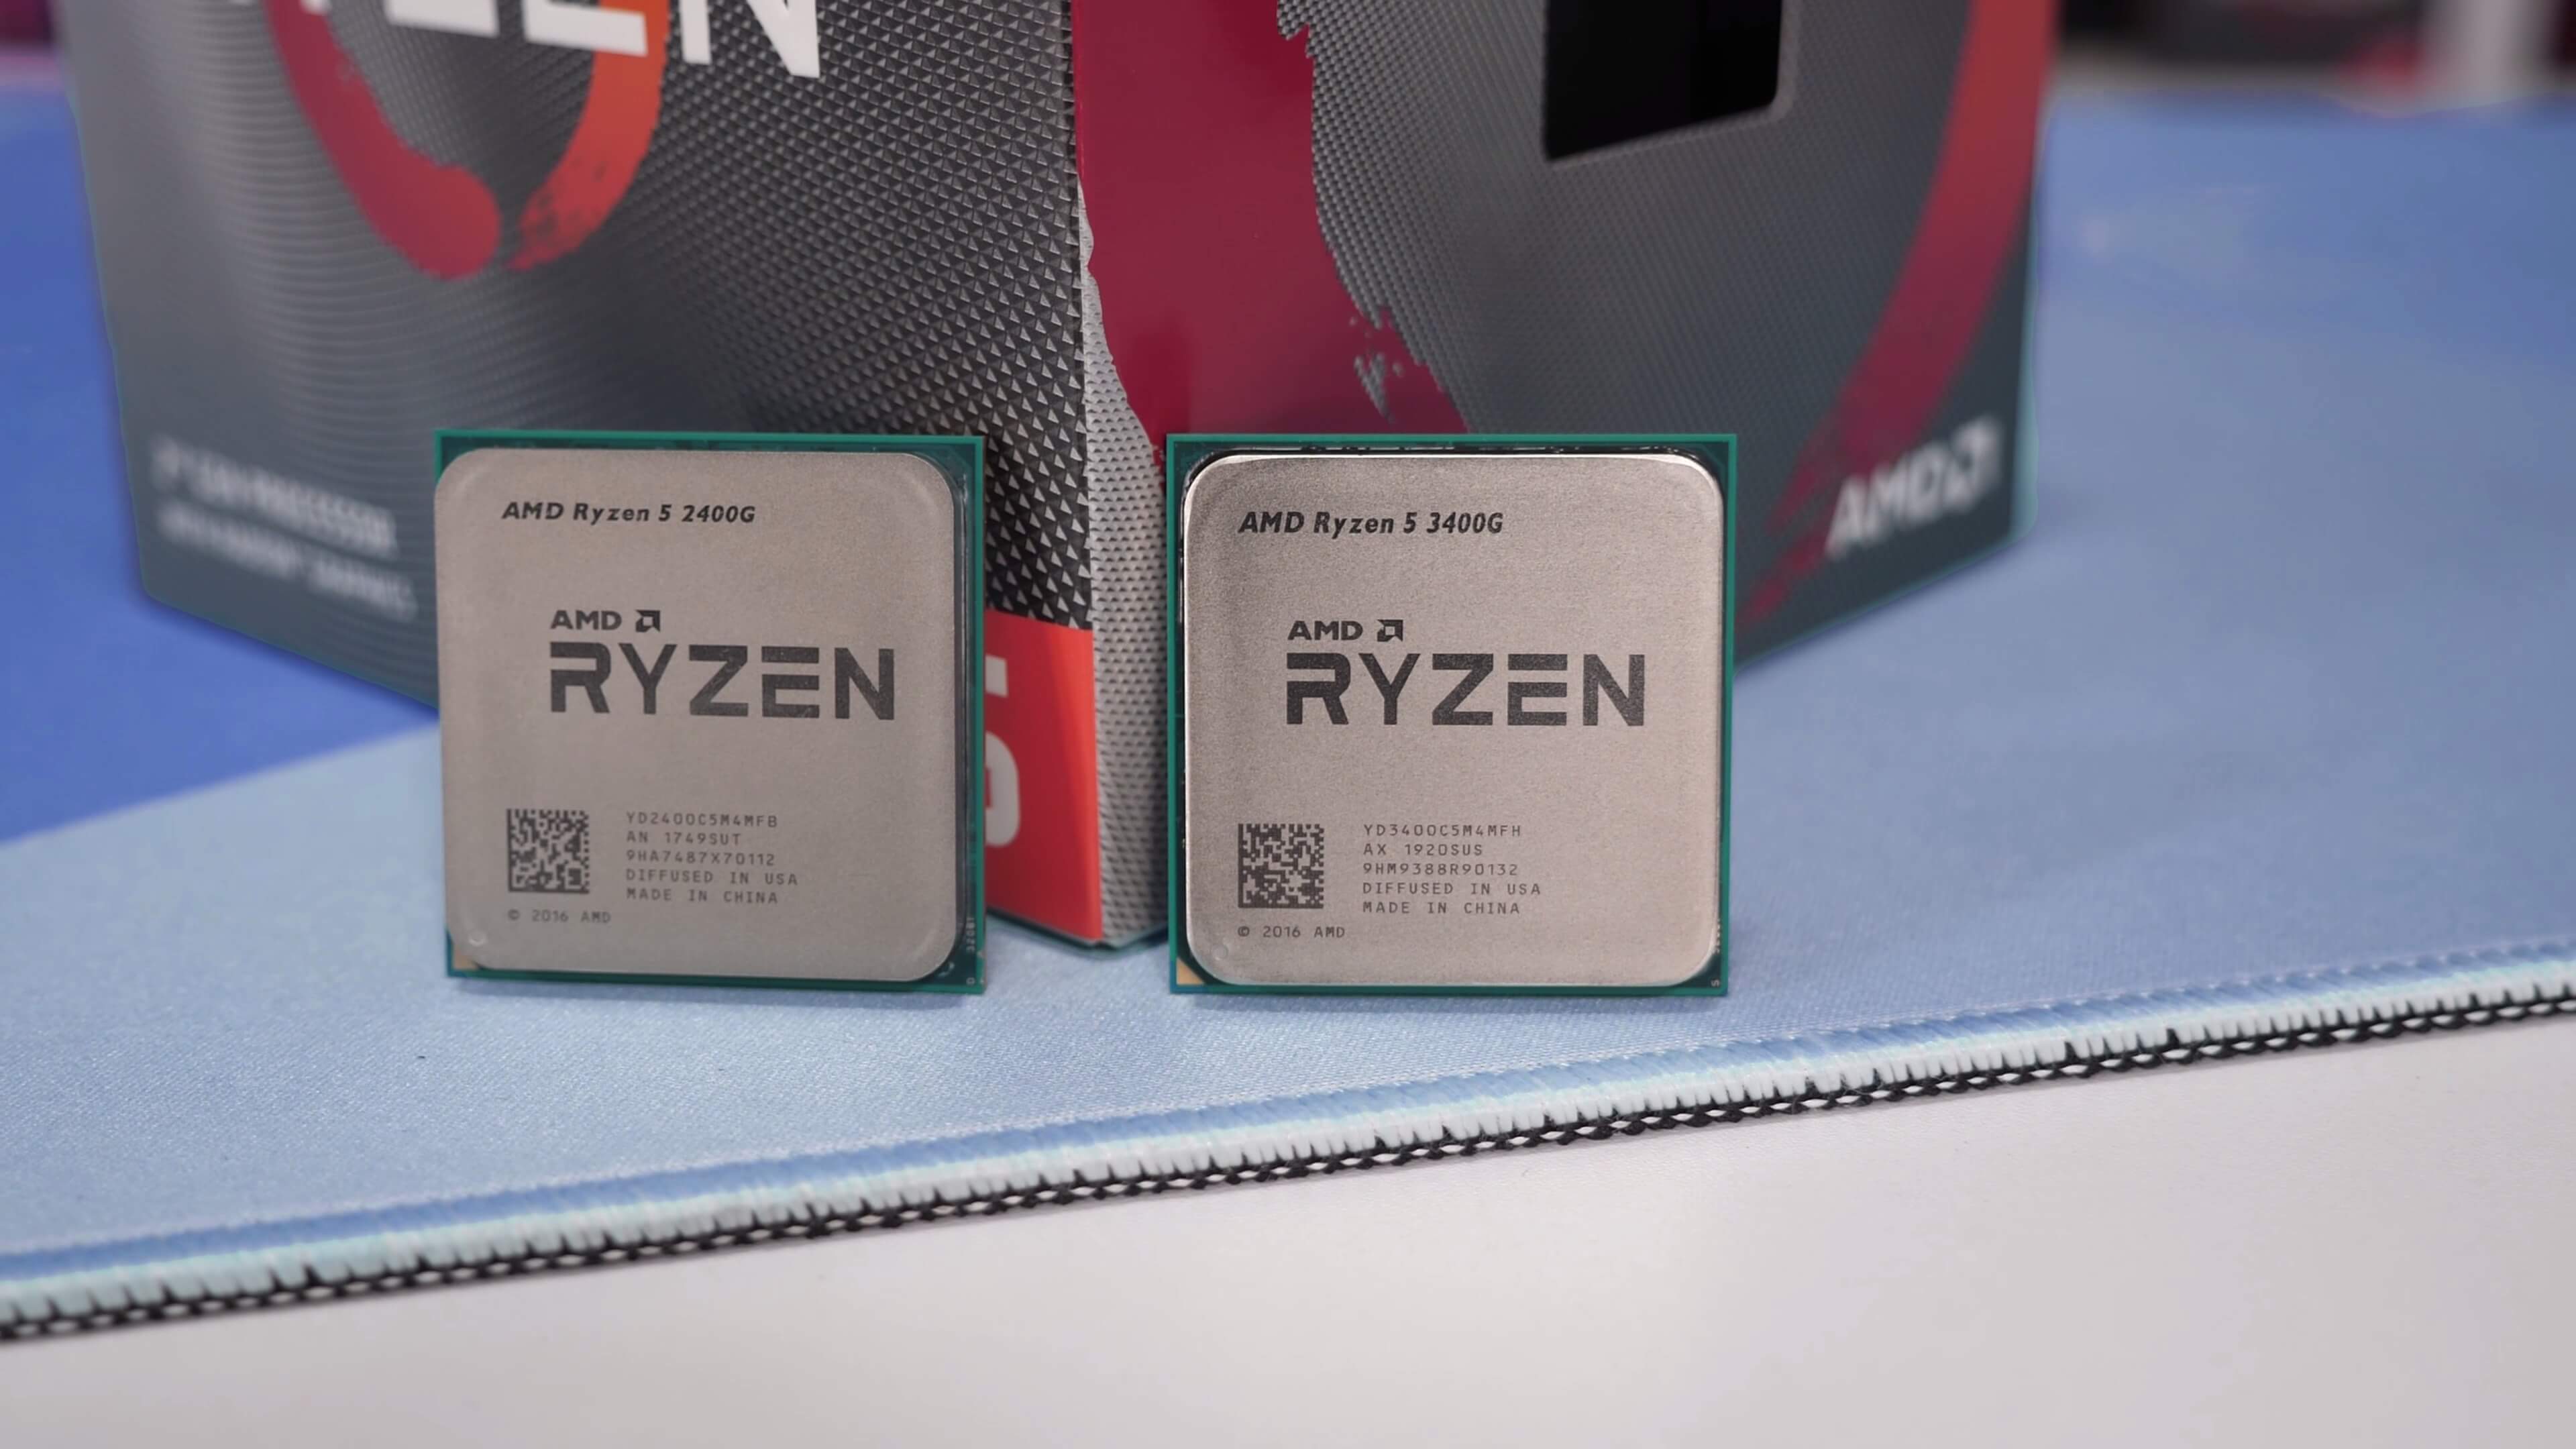 5 3400g купить. Процессор AMD Ryzen 5 3400g. Процессор AMD Ryzen 5 Pro 2400g. AMD Ryzen 5 5600g. AMD Ryzen 5 3350g.